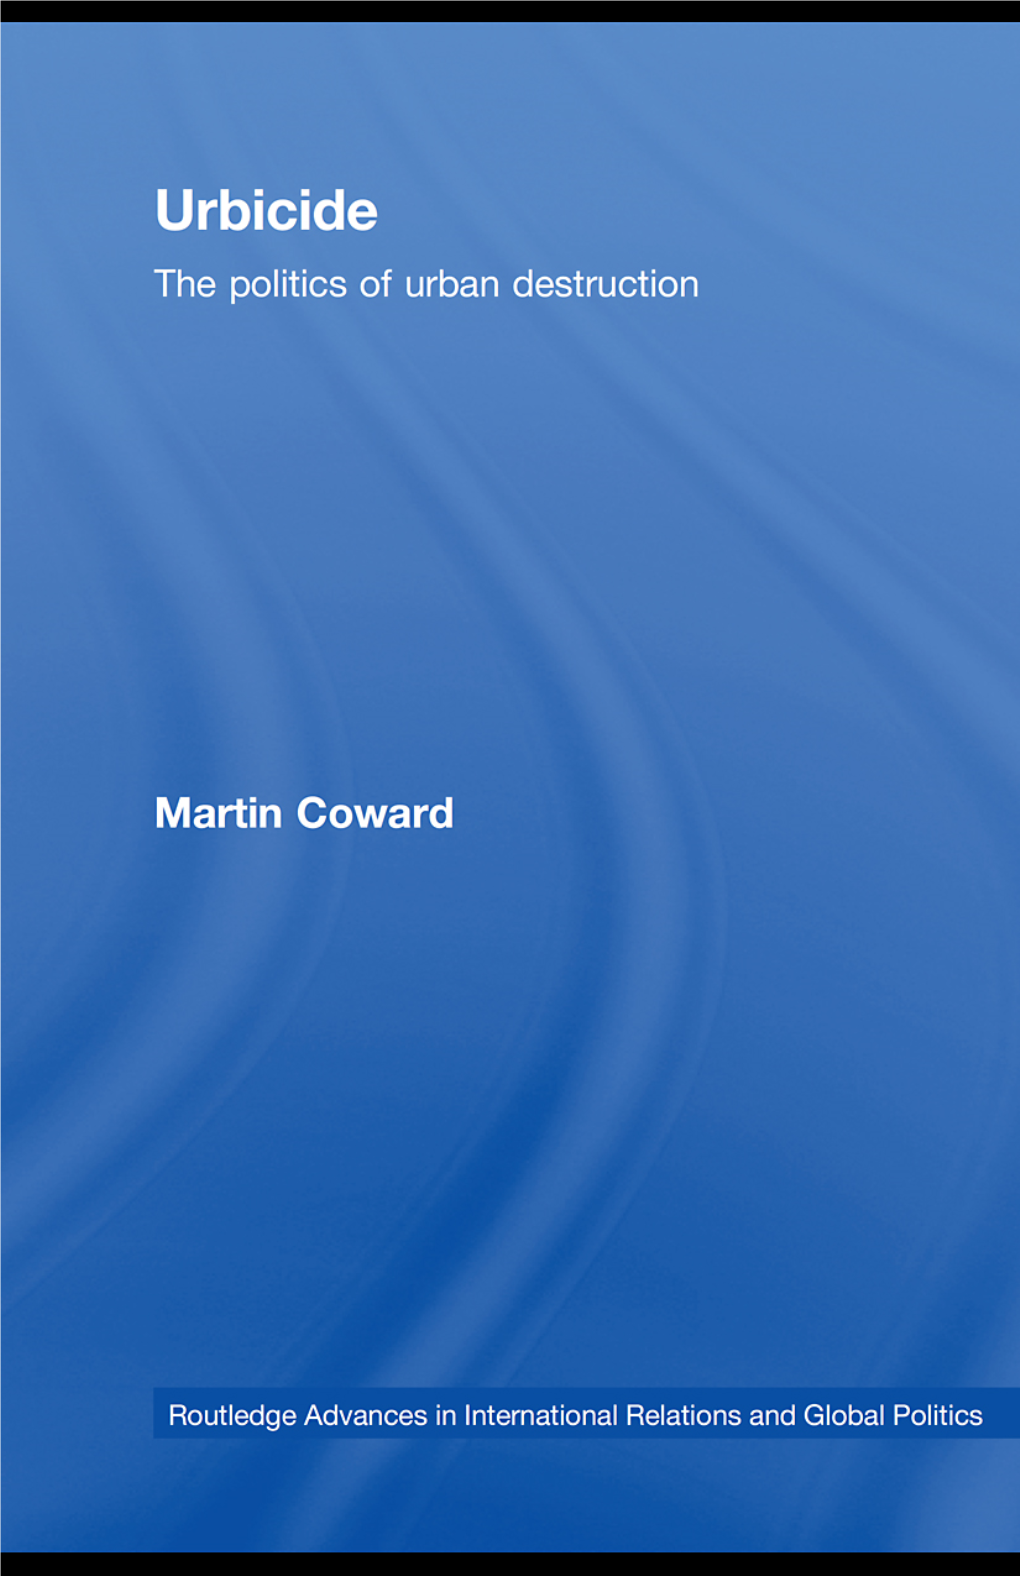 The Politics of Urban Destruction 61 Ethics, Liberalism and Realism in Martin Coward International Relations Mark D